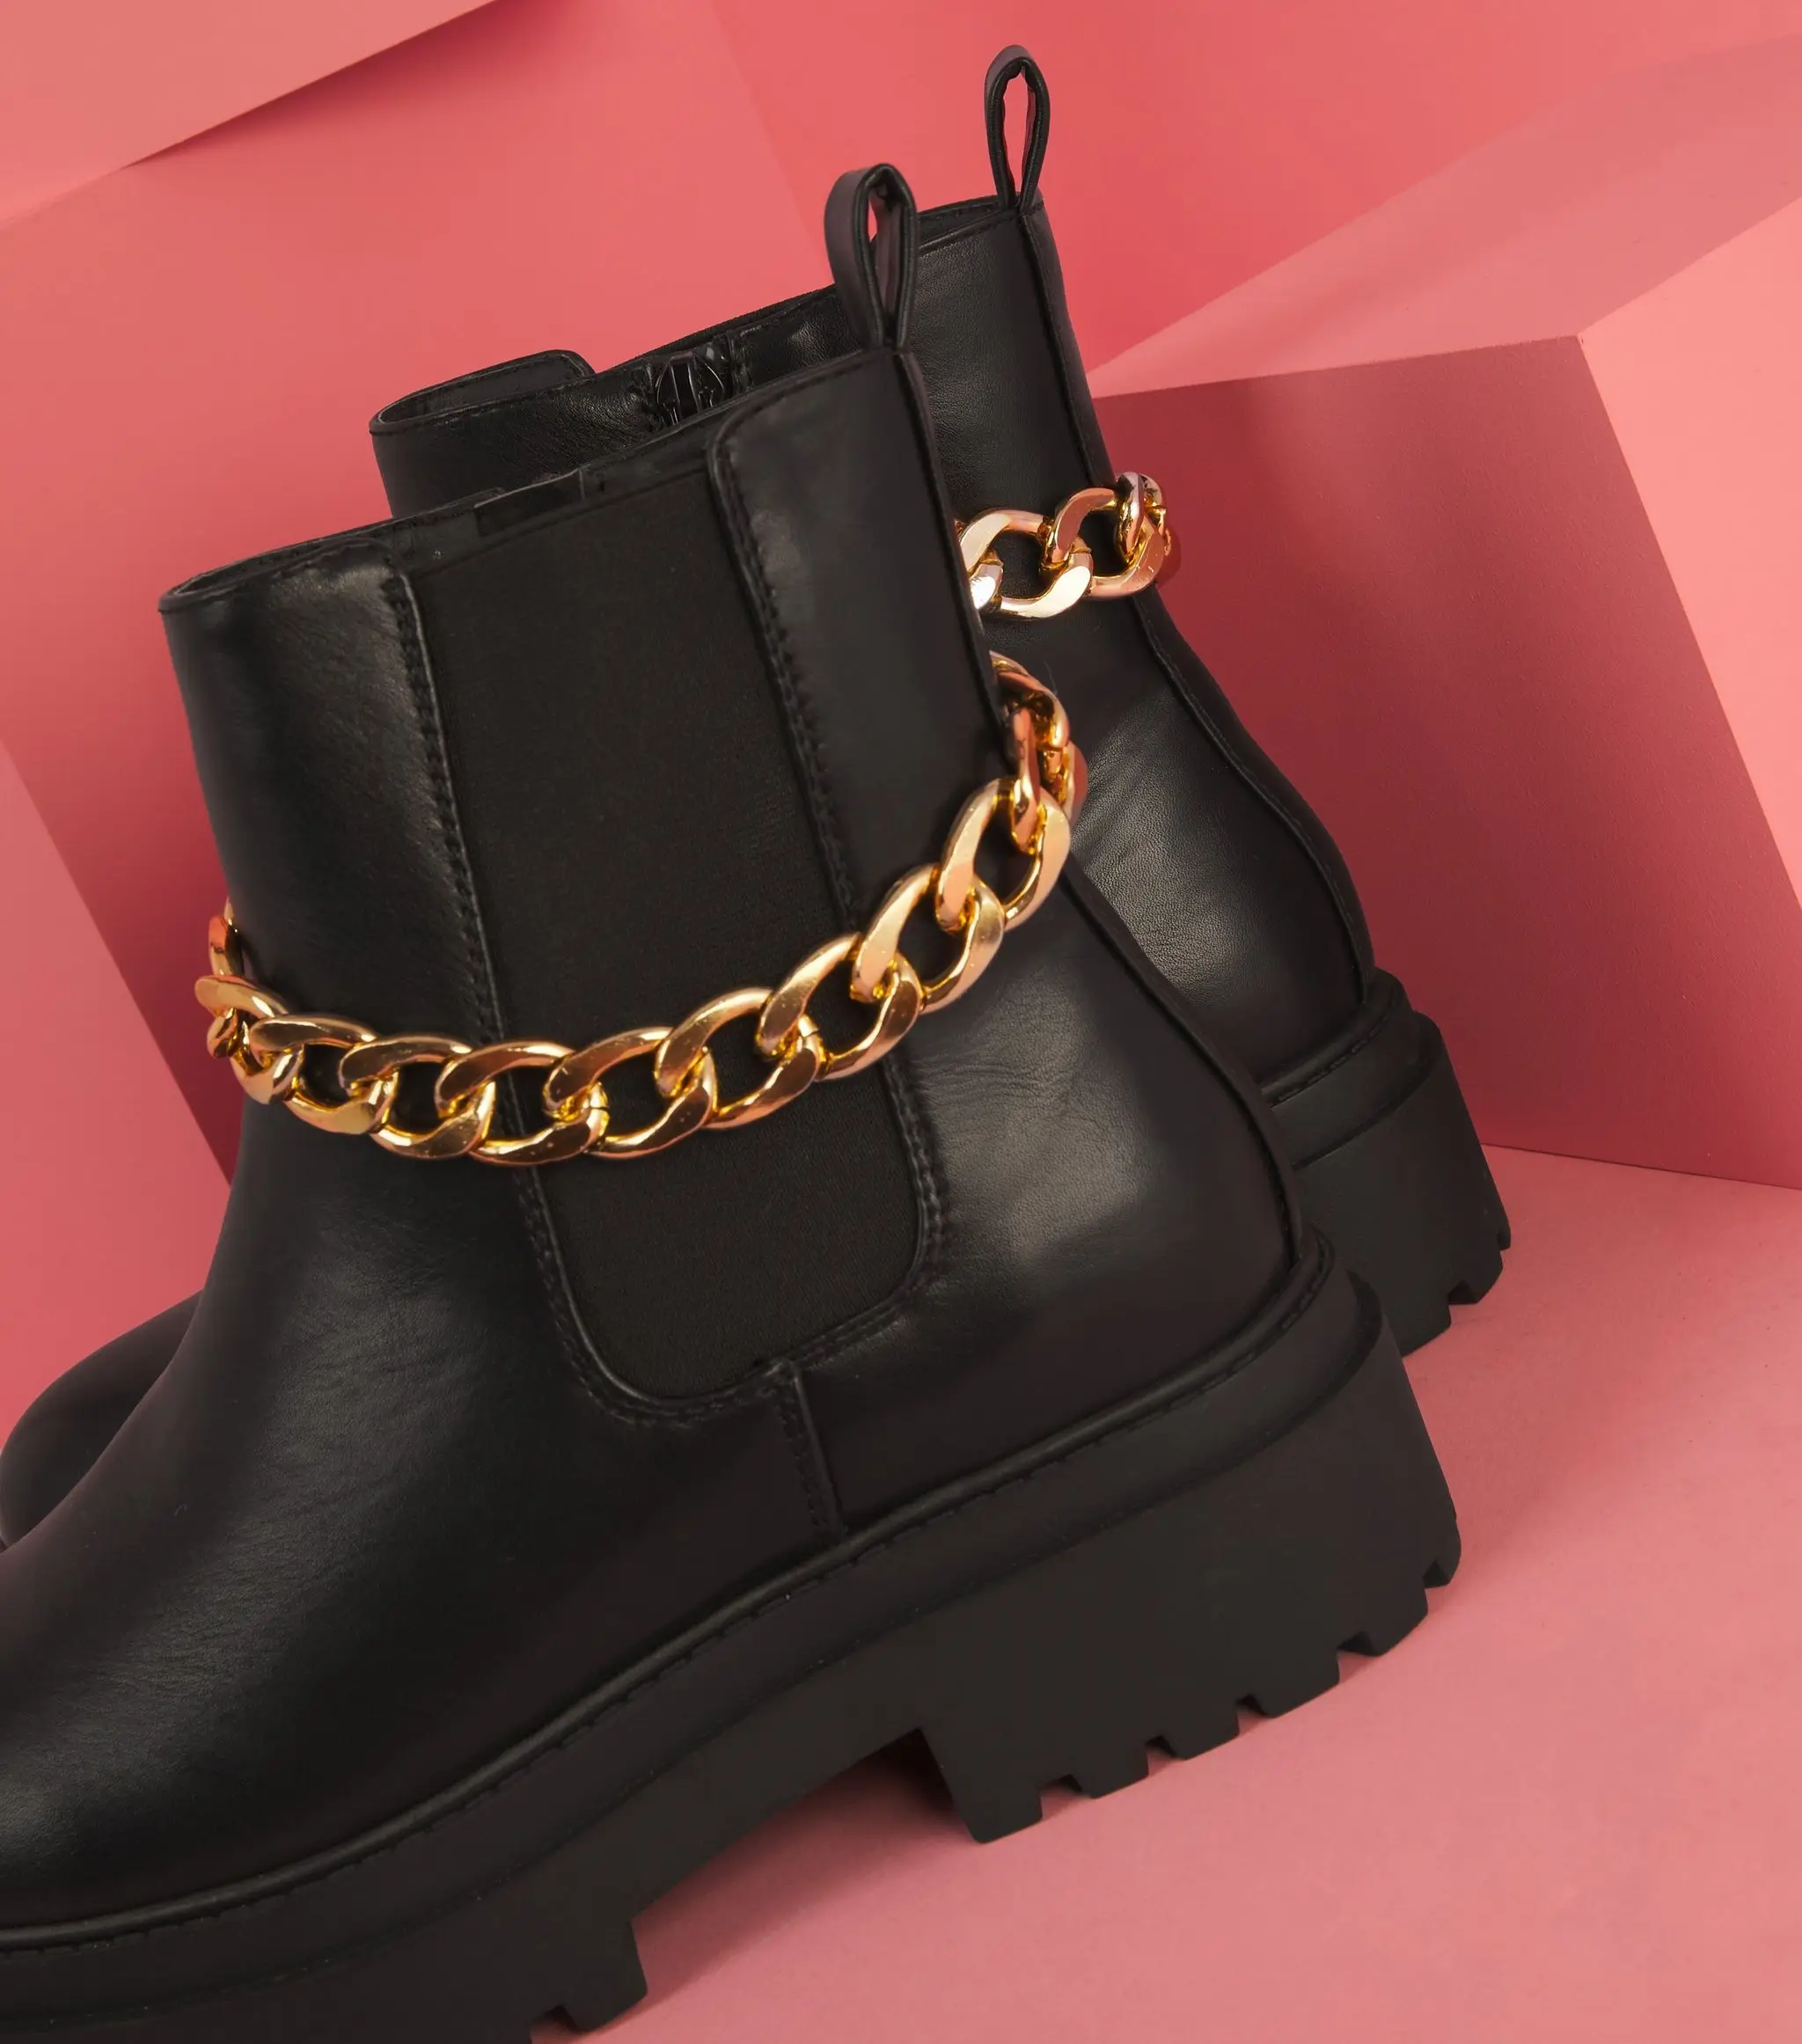 Metal chain Pantshoes Black PU Elastic Slip-On Boots Women Ladies Ankle Boots